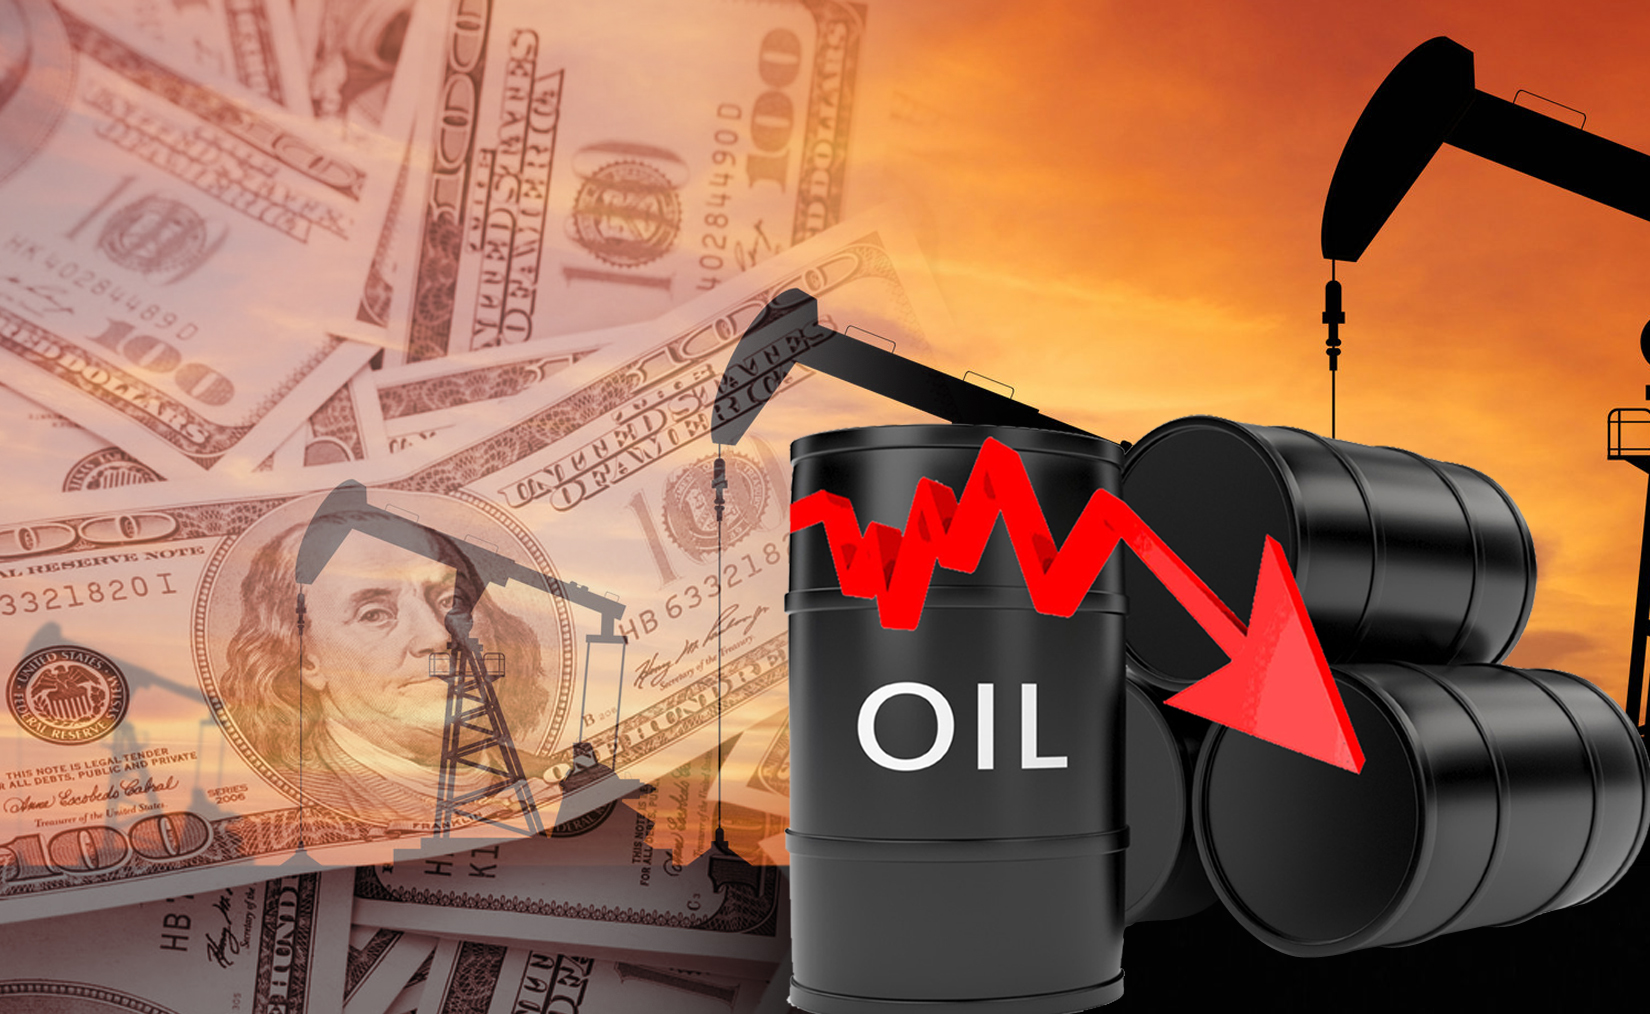 Kuwait oil price sheds USD 1.12 to USD 37.83 a barrel - KPC                                                                                                                                                                                               